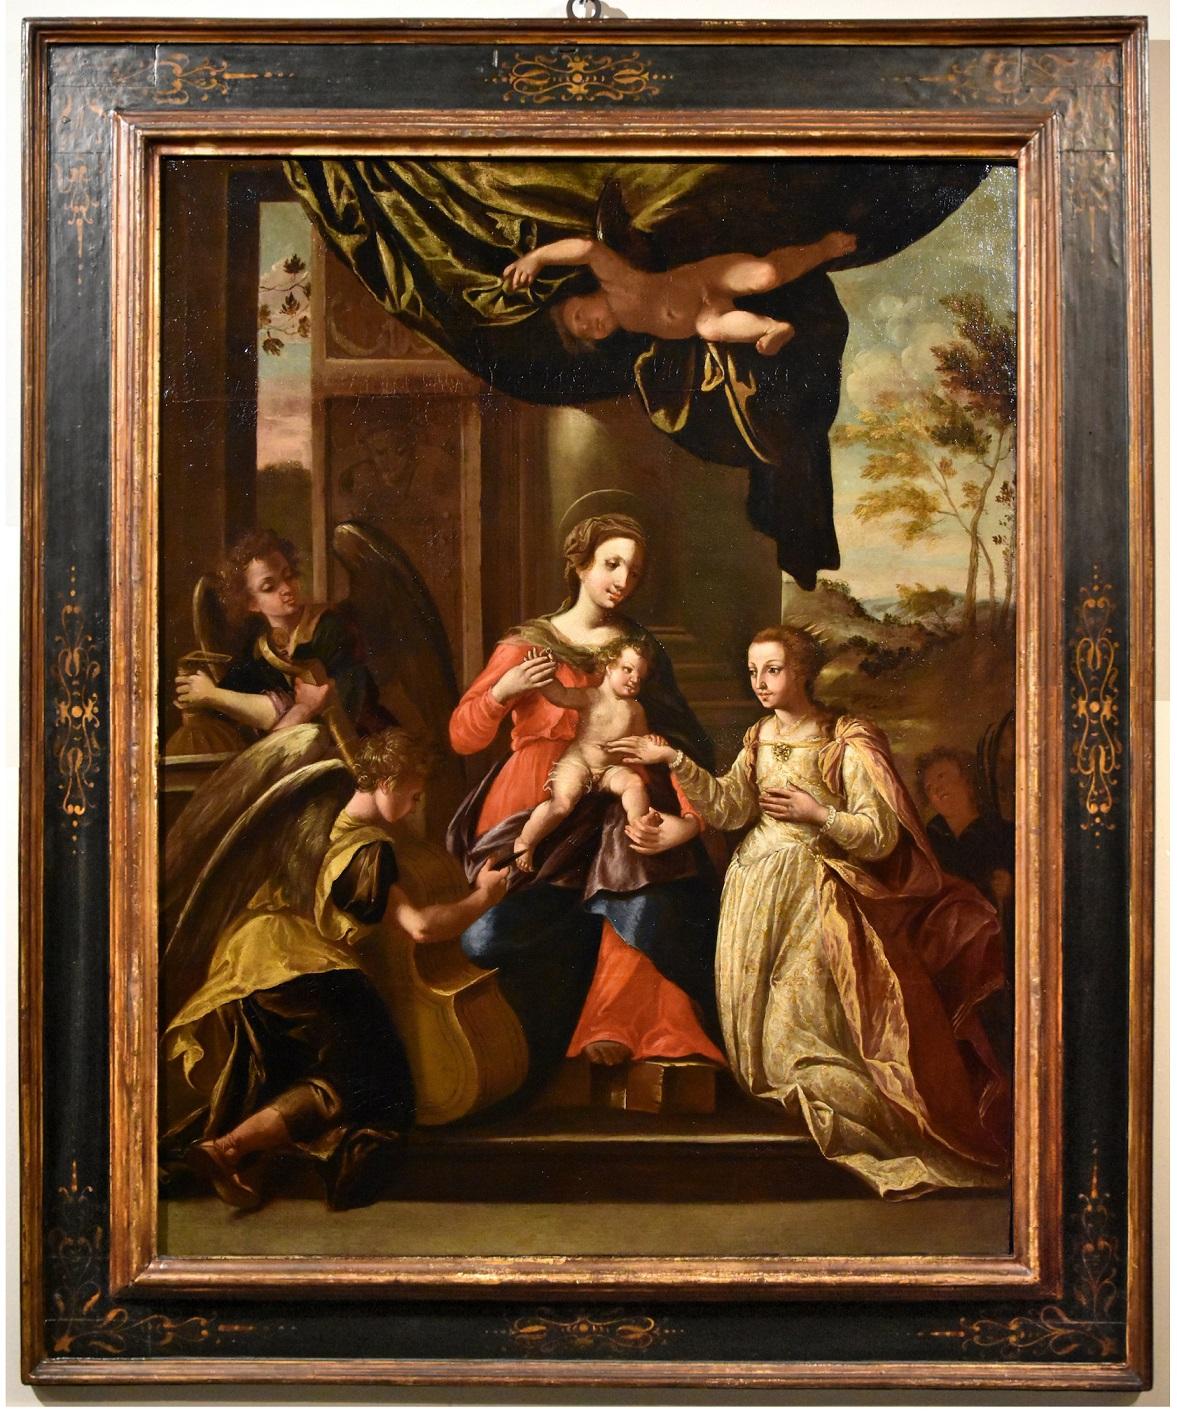 Mariage Mystique Catherine Brizio, Gemälde Öl auf Leinwand, Alter Meister, 17. Jahrhundert  – Painting von Francesco Brizio (Bologna, 1574 - Bologna 1623) 